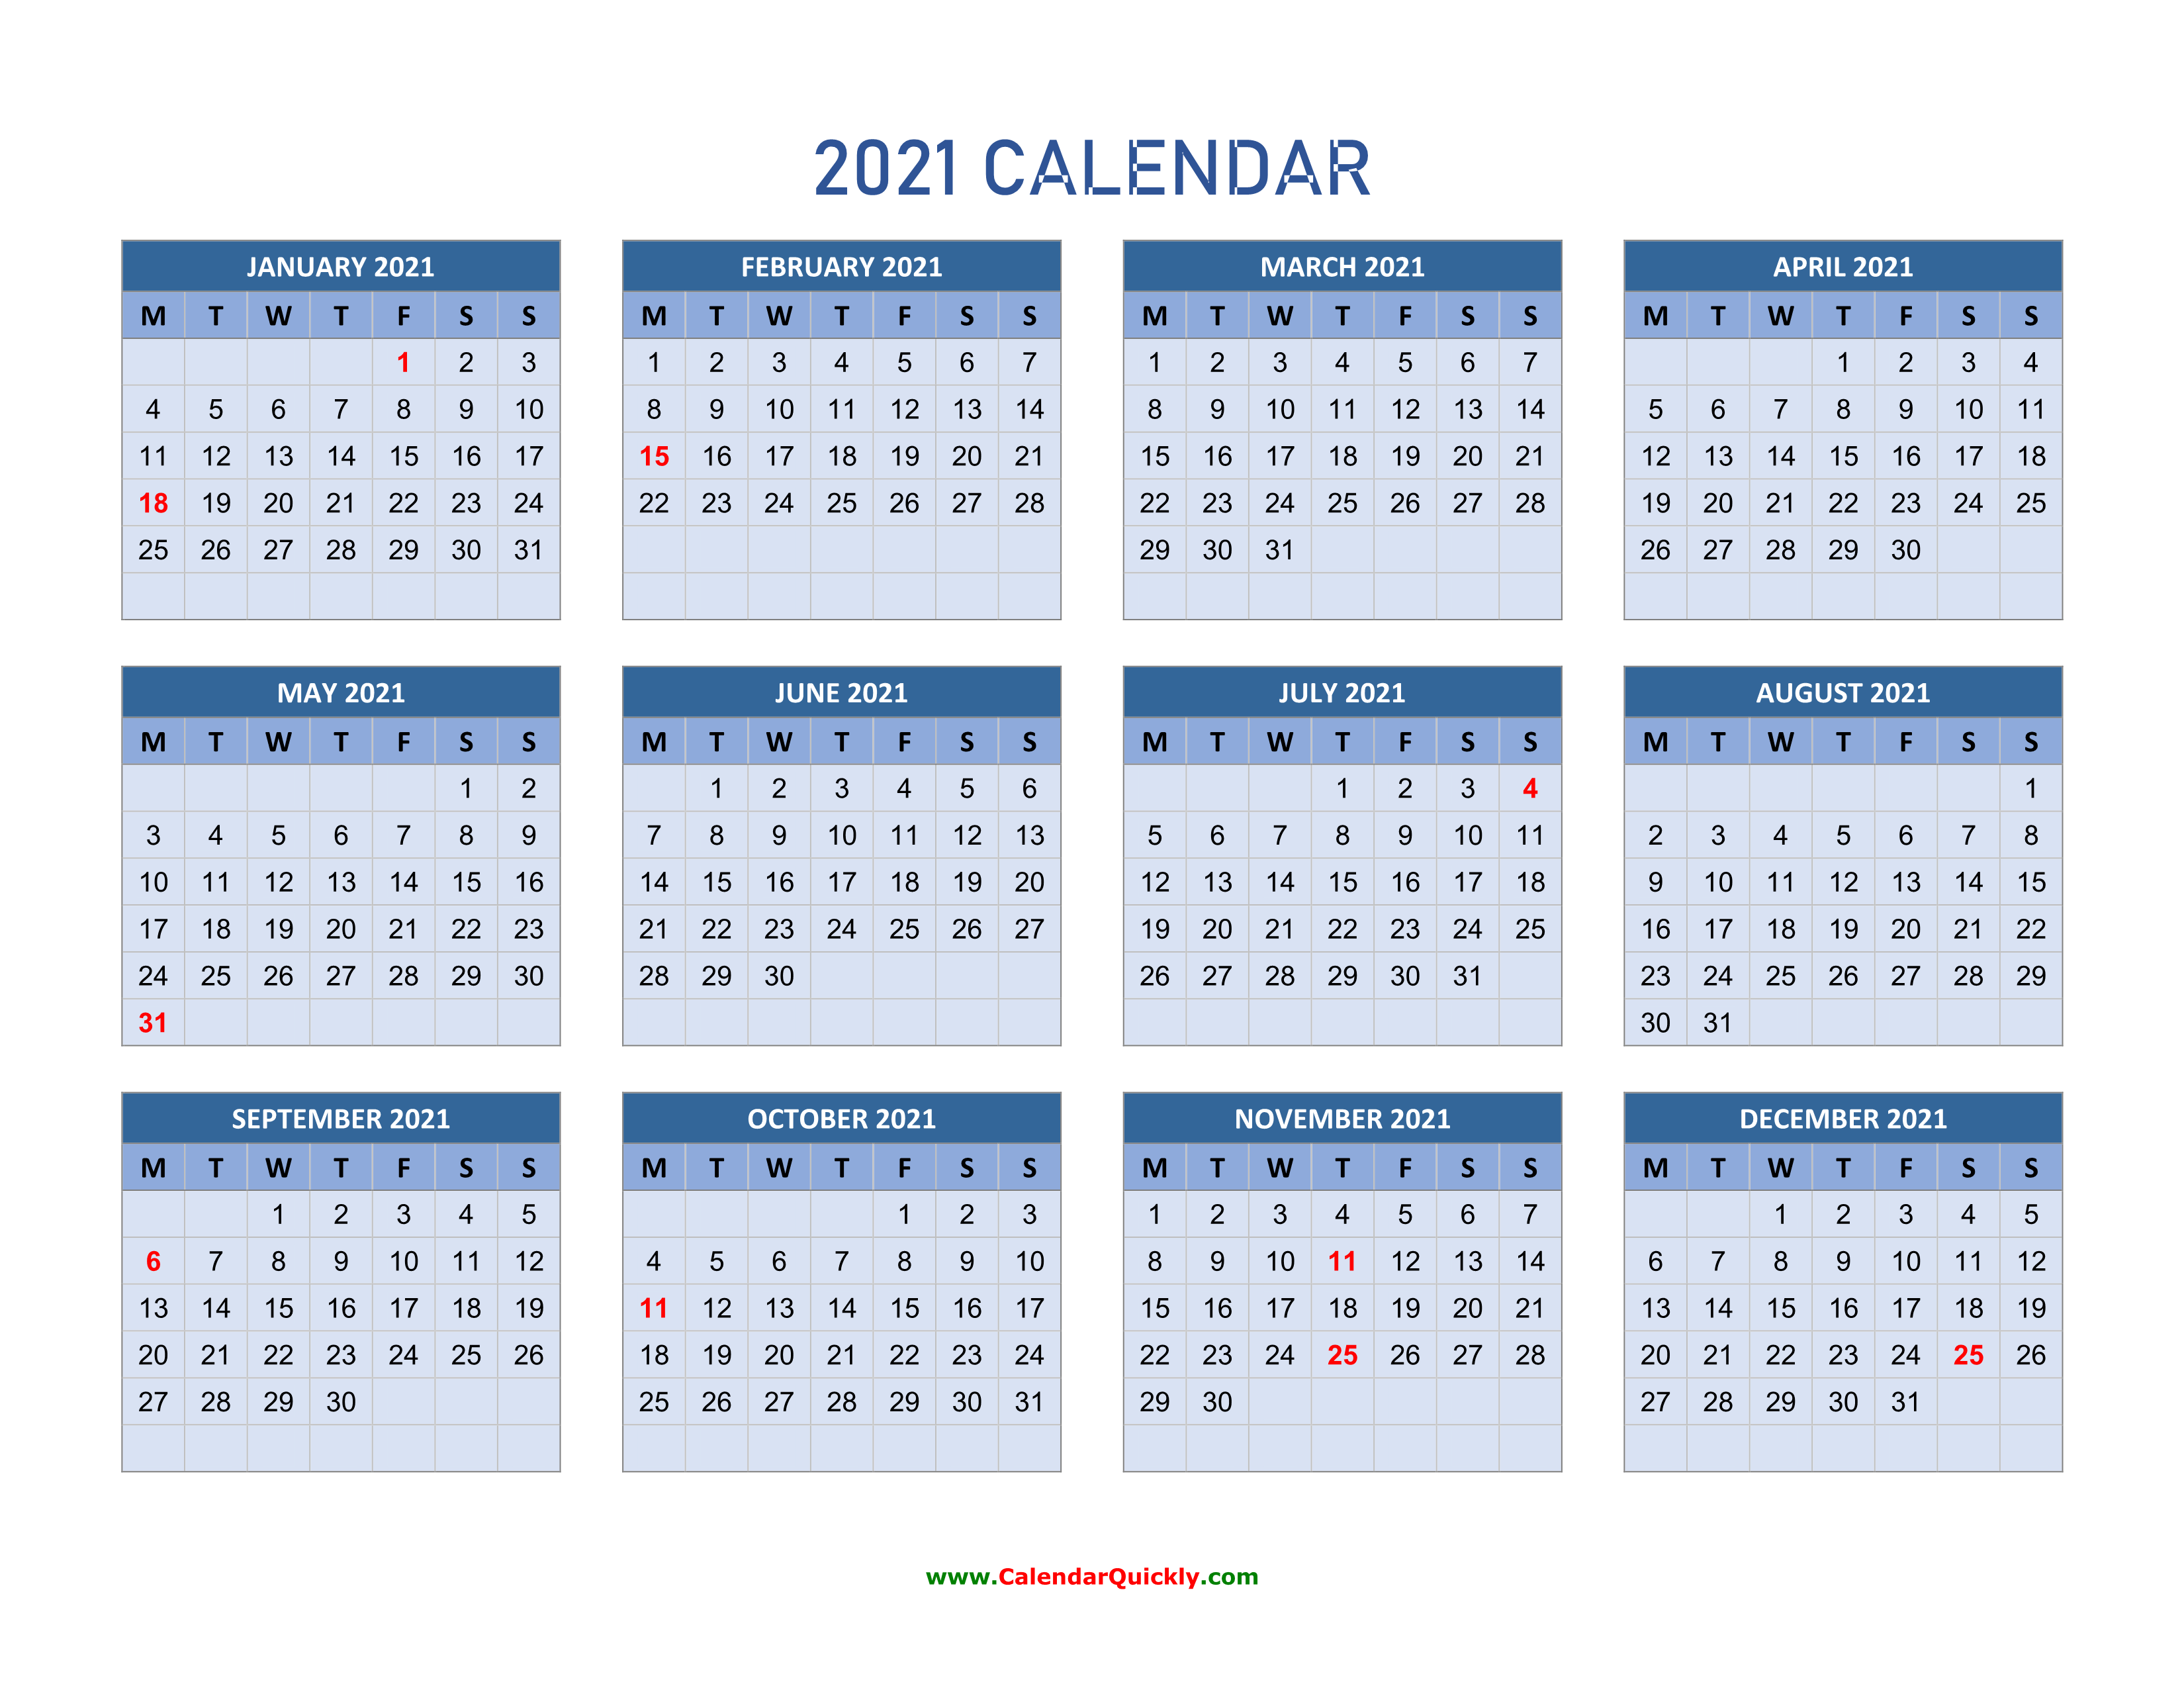 monday-2021-calendar-horizontal-calendar-quickly